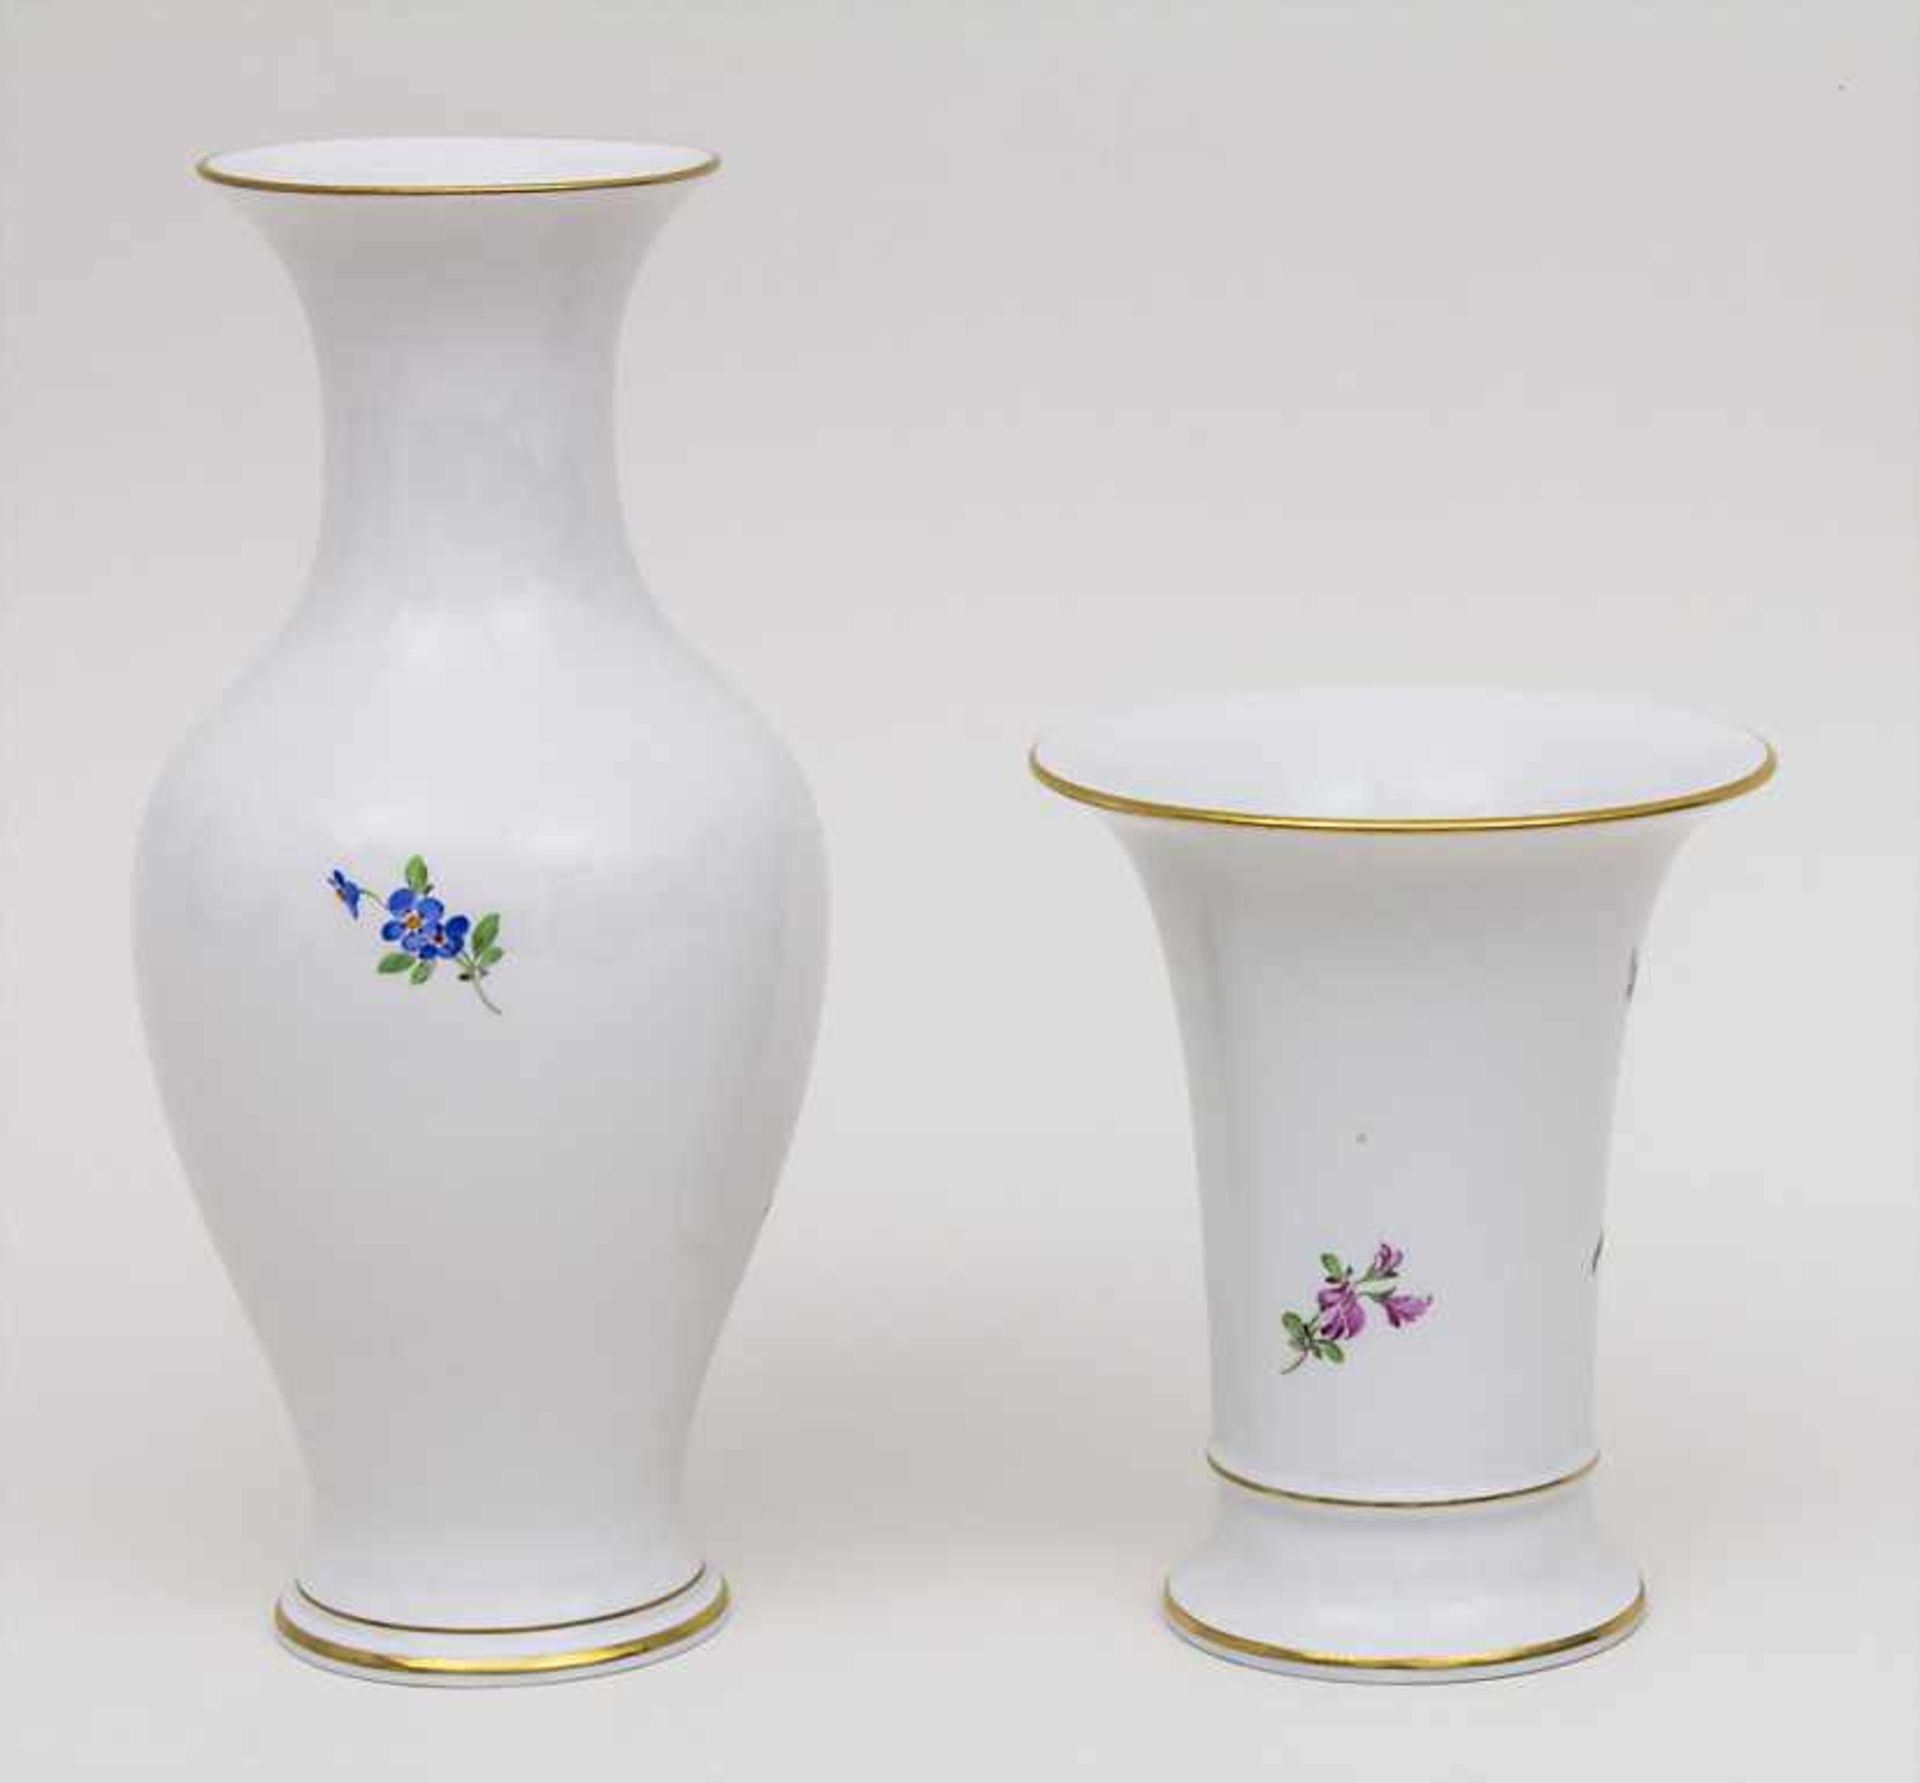 2 Vasen / 2 Vases, Meissen, Mitte 20. Jh. Material: Porzellan, polychrom bemalt, mit Gold - Image 2 of 3